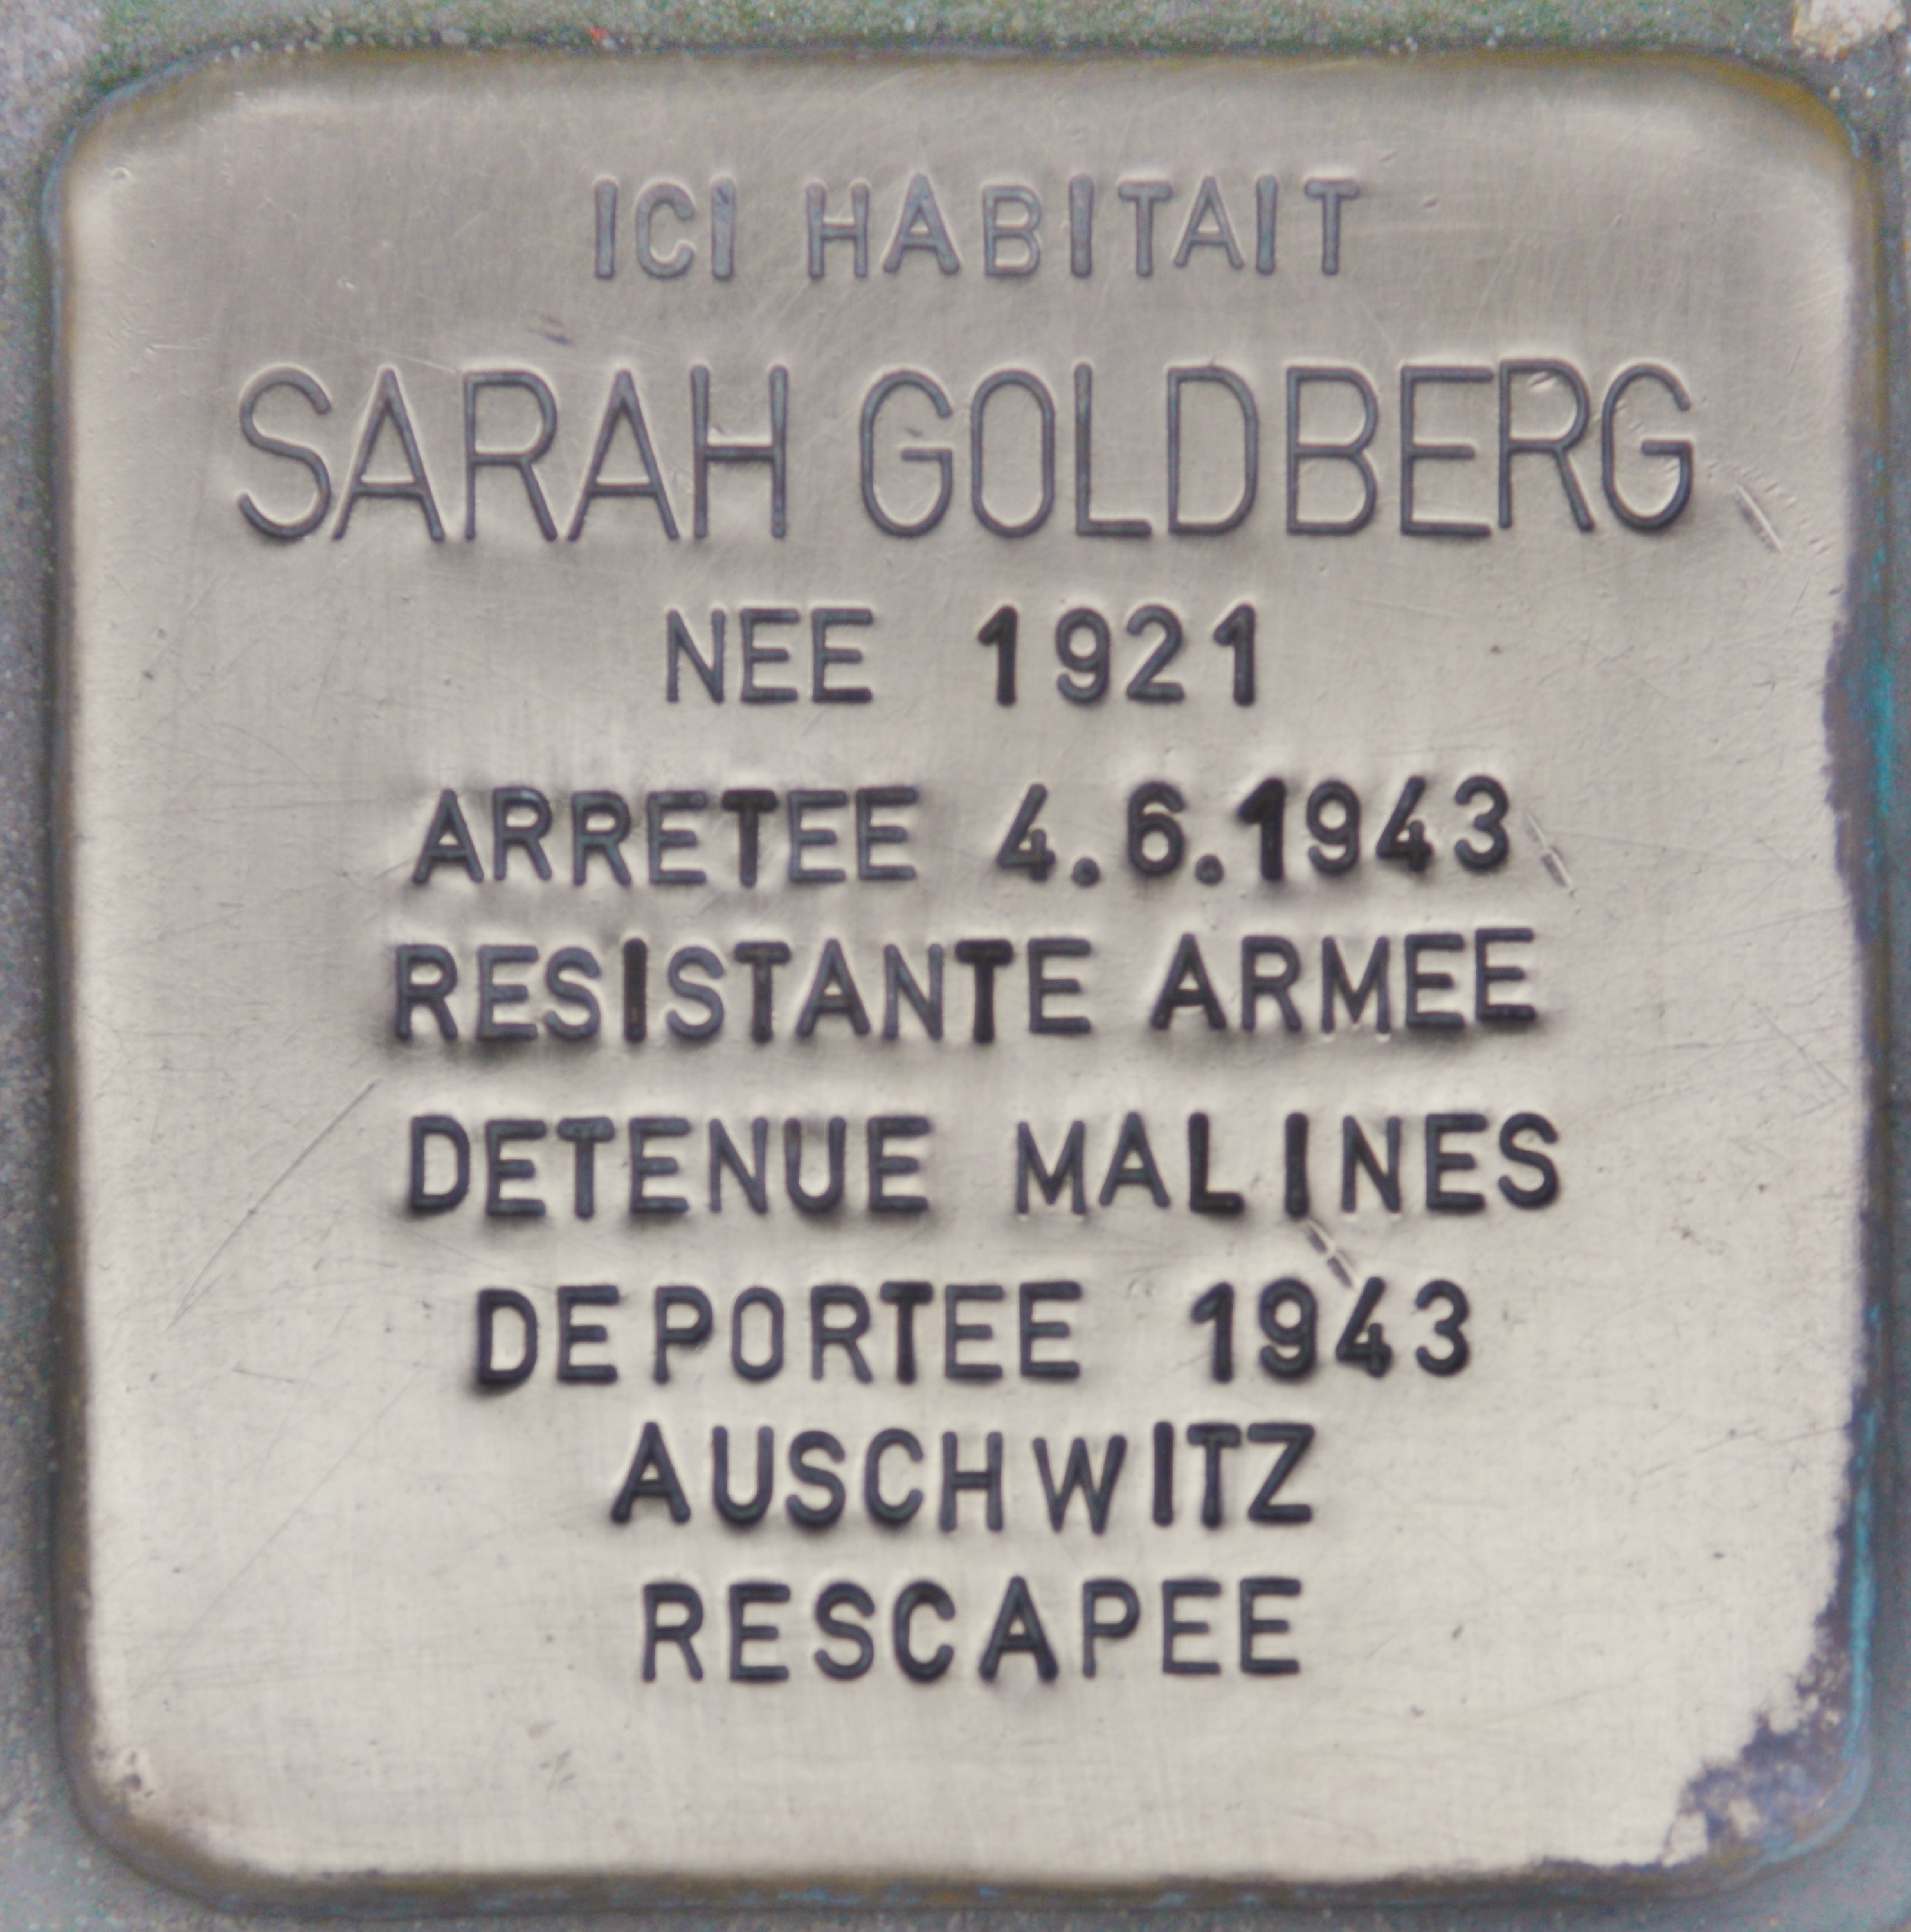 Sarah goldberg wikipedia